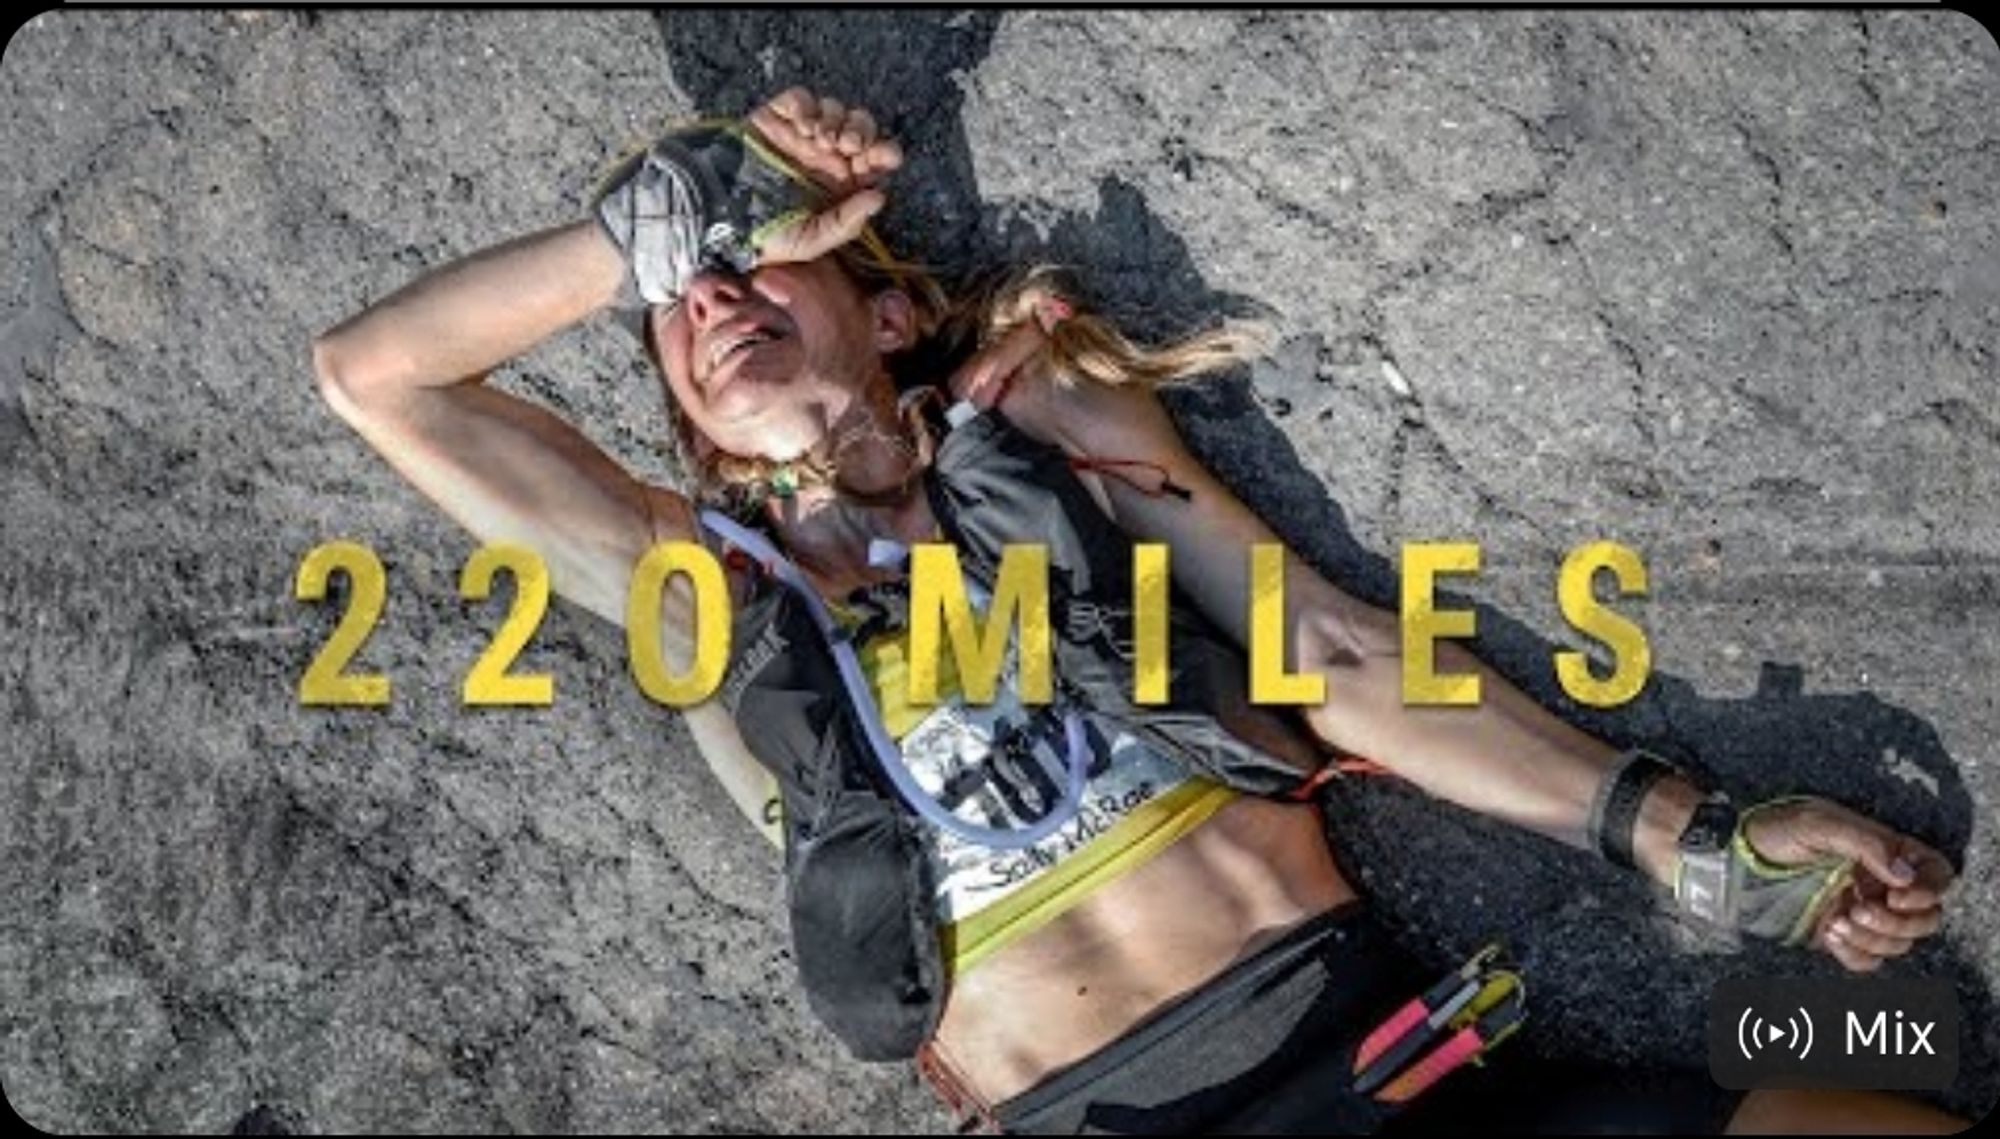 Racing Tahoe - Ultramarathon Documentary